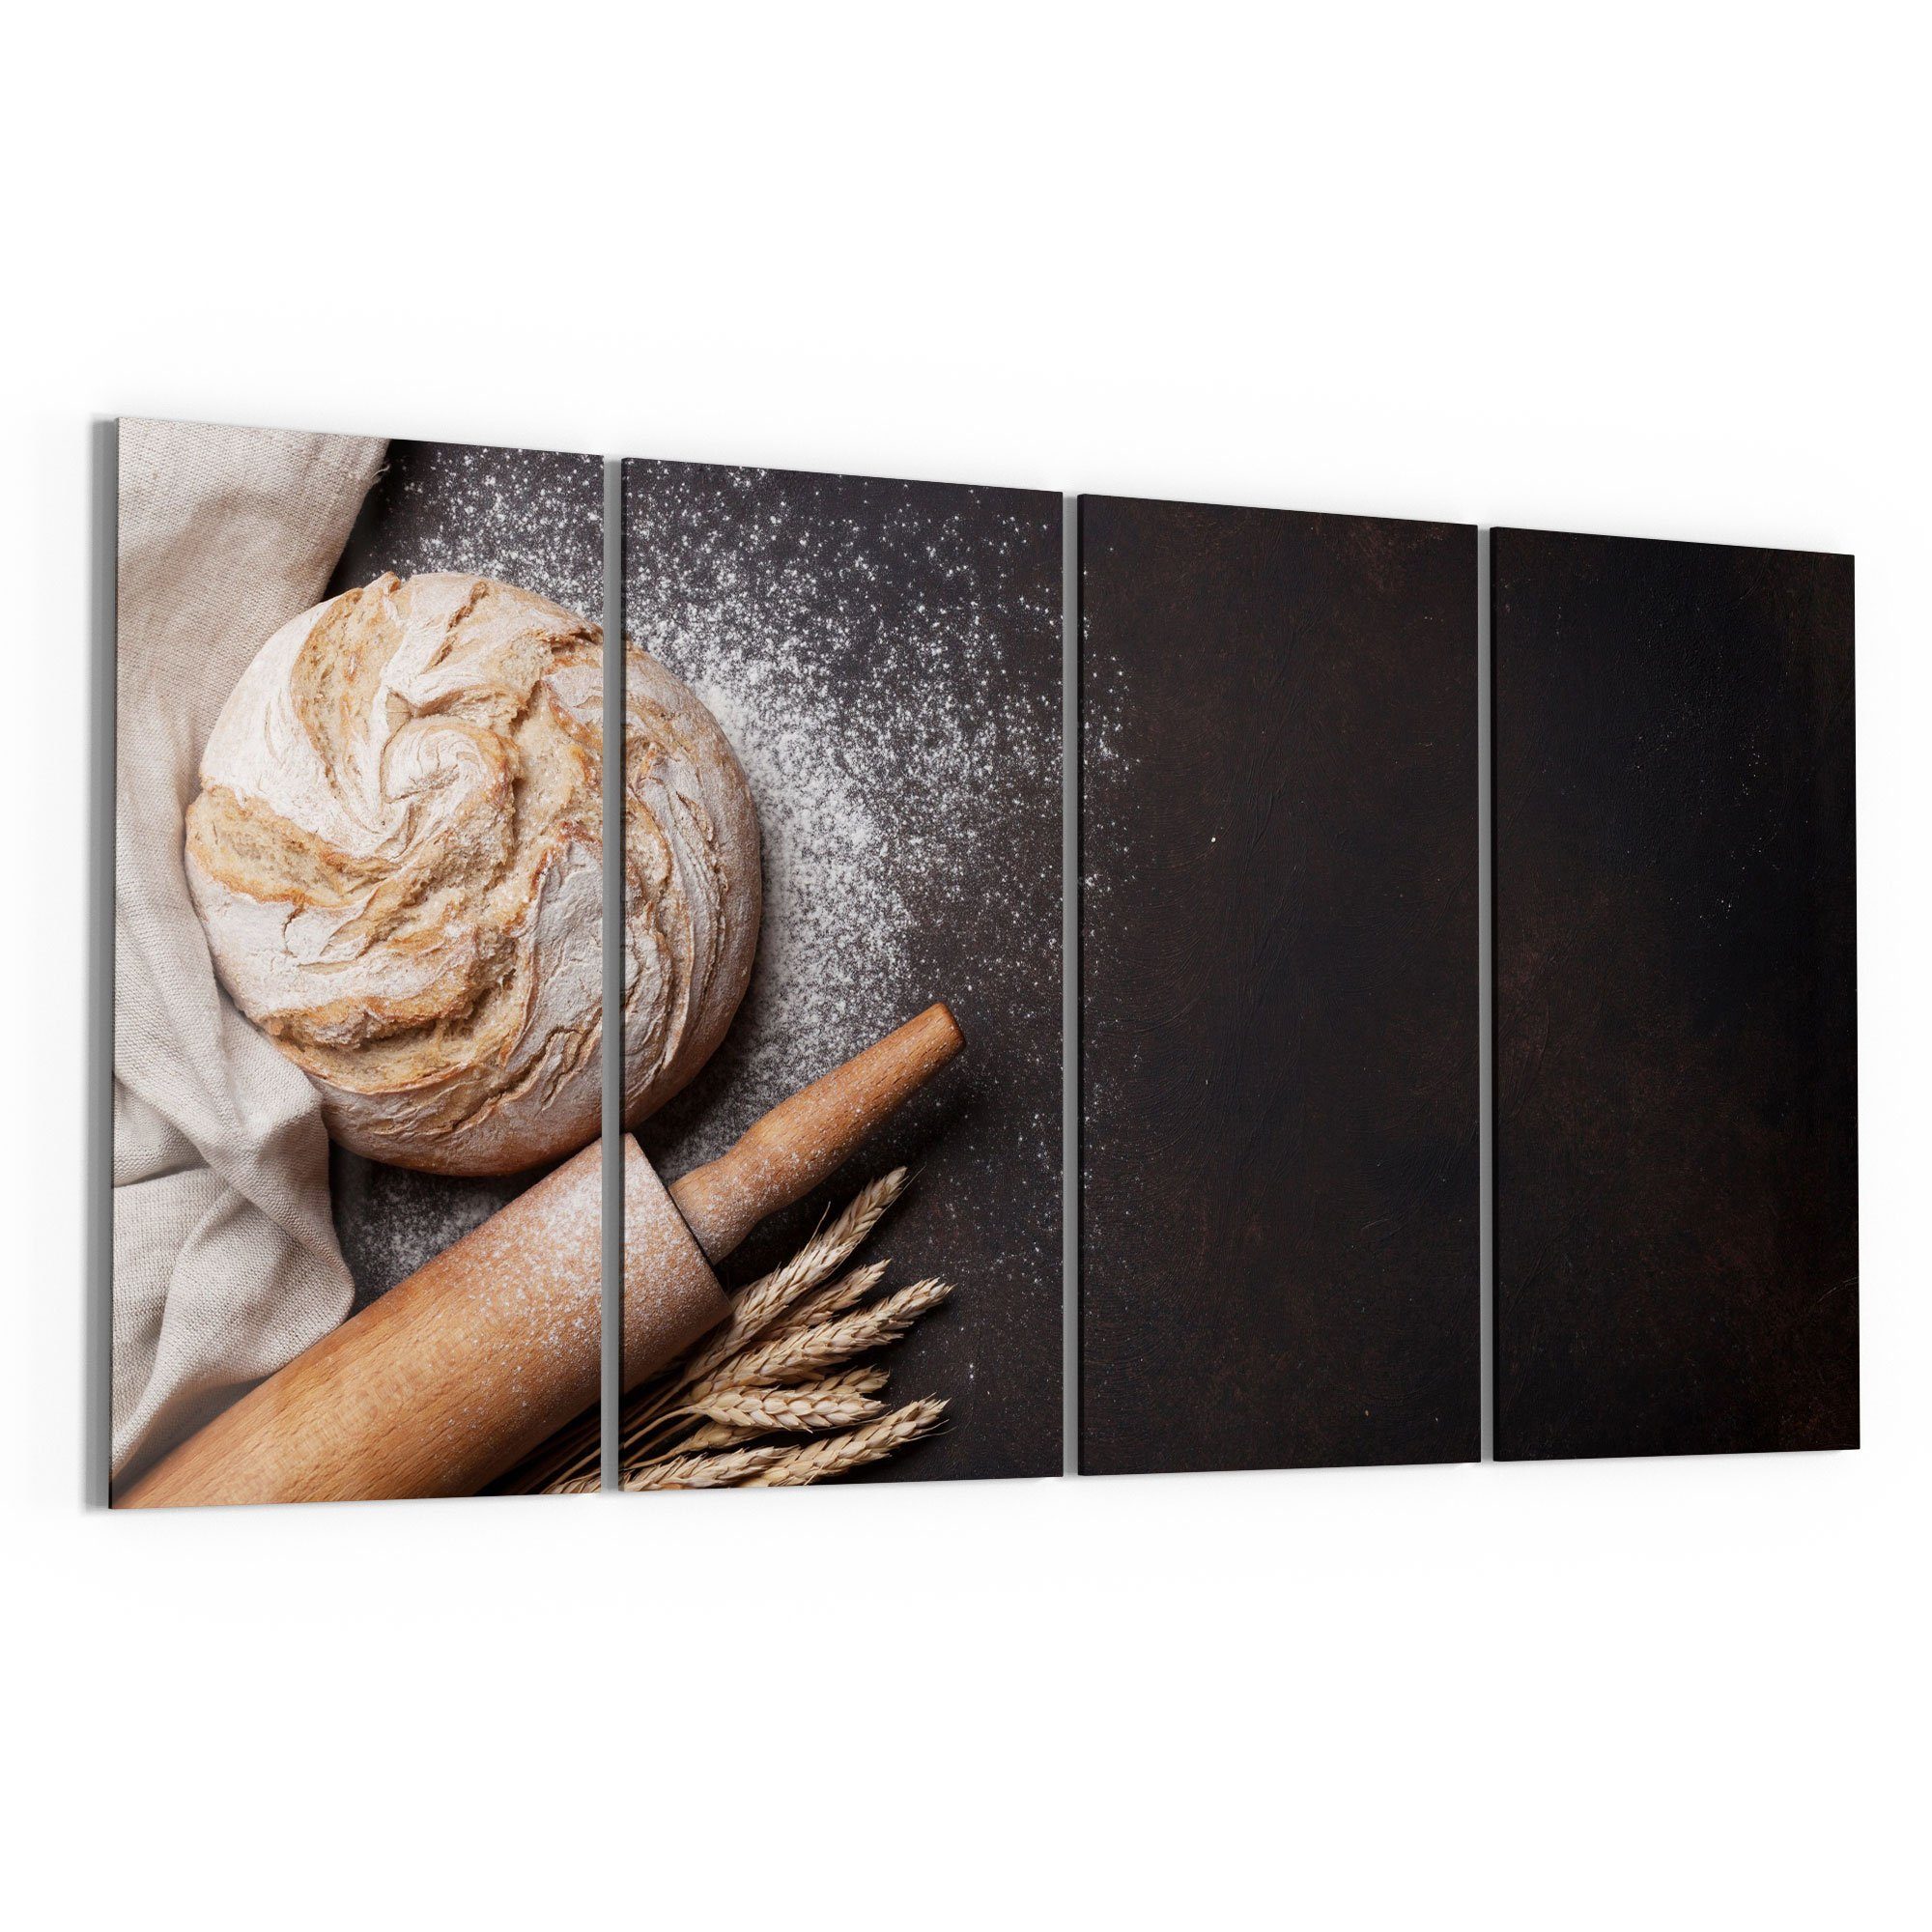 DEQORI Glasbild 'Brot mit Nudelholz', 'Brot mit Nudelholz', Glas Wandbild Bild schwebend modern